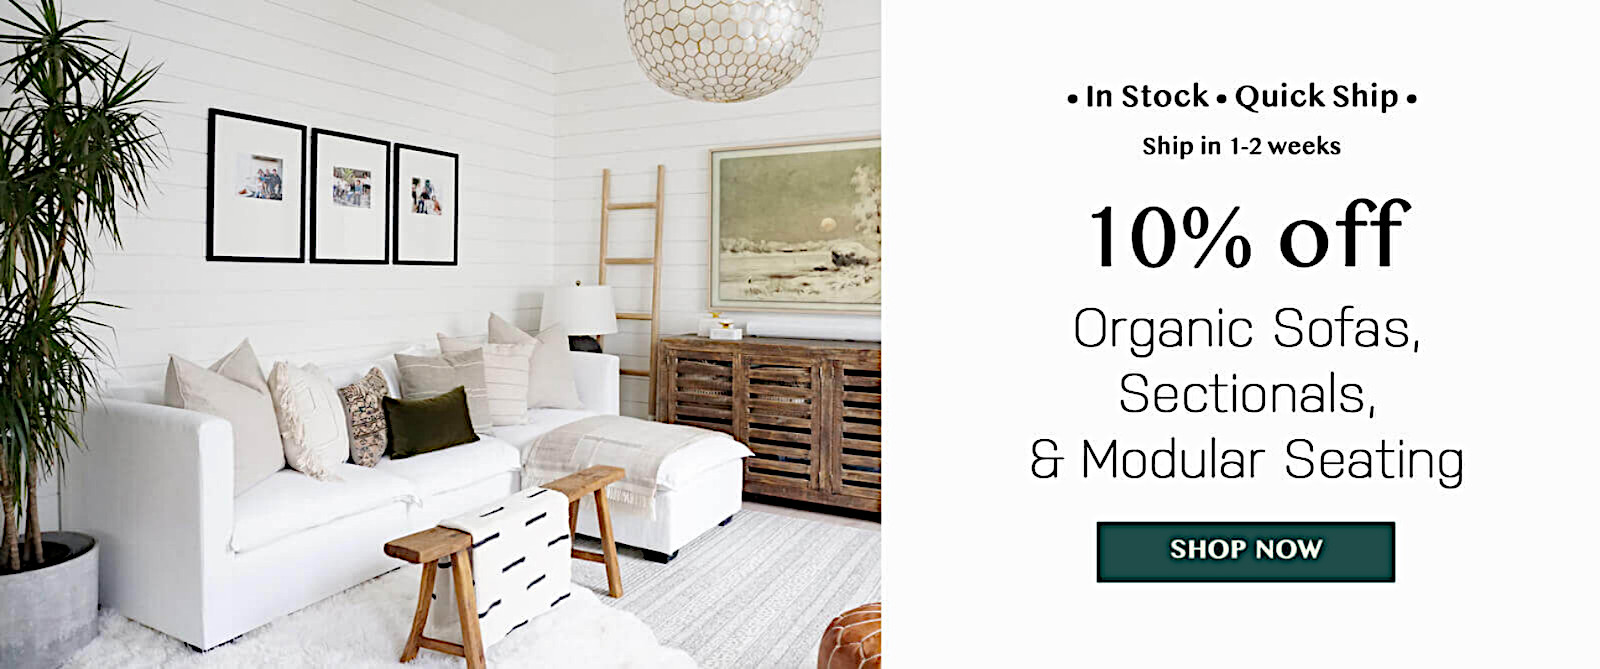 Cheap Price organic sofas sectionals modular seating